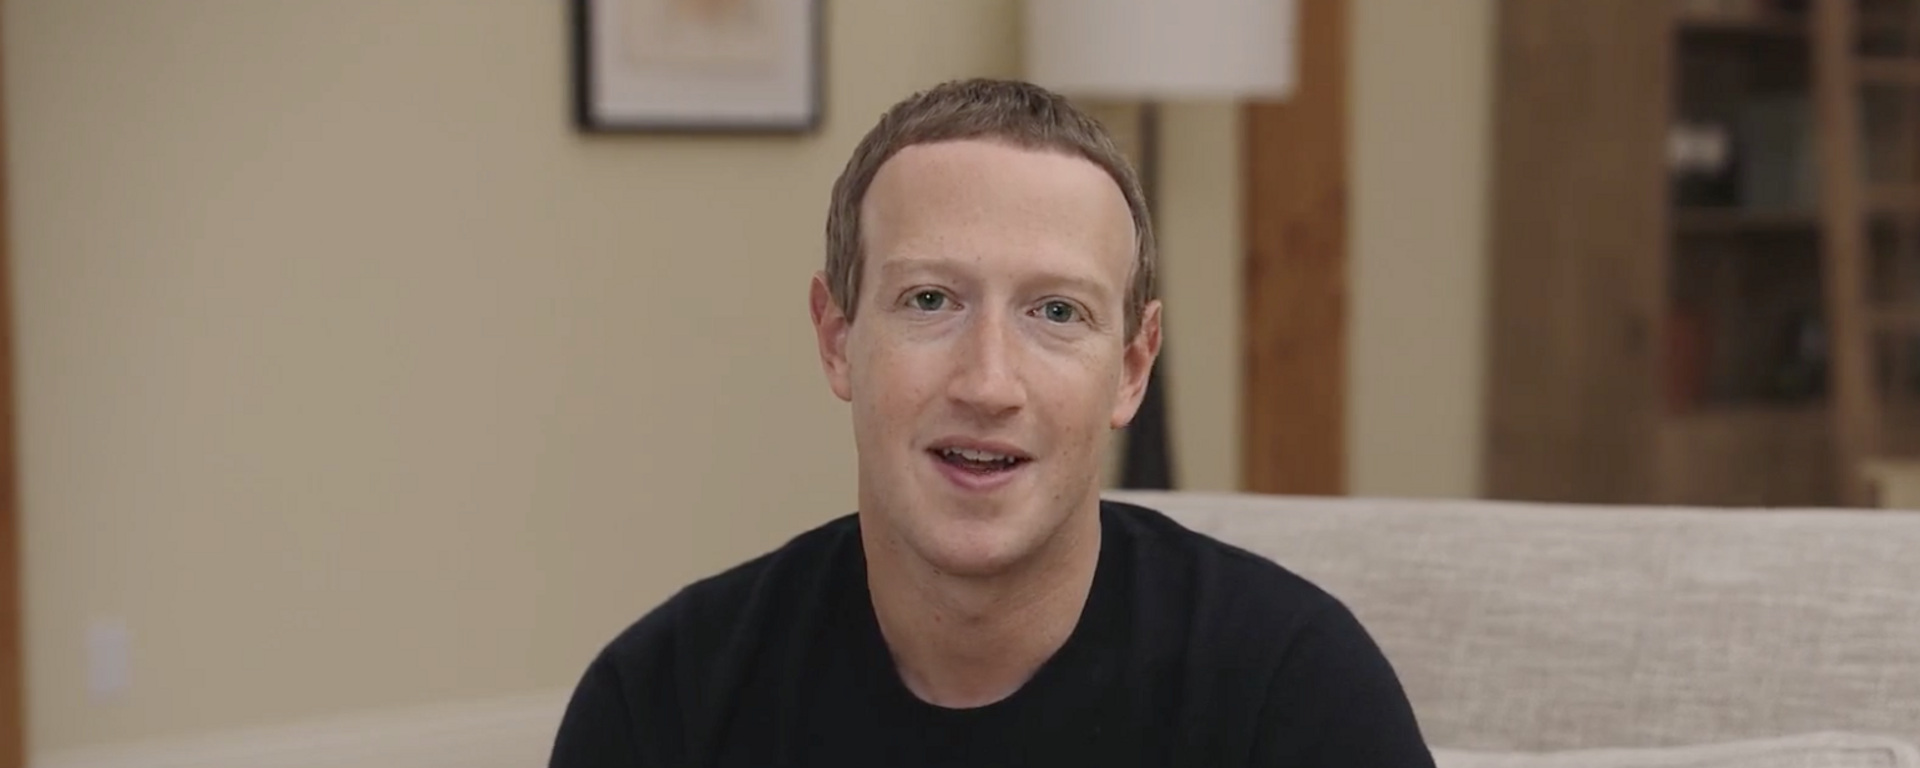 Mark Zuckerberg, fundador de Facebook - Sputnik Mundo, 1920, 28.10.2021